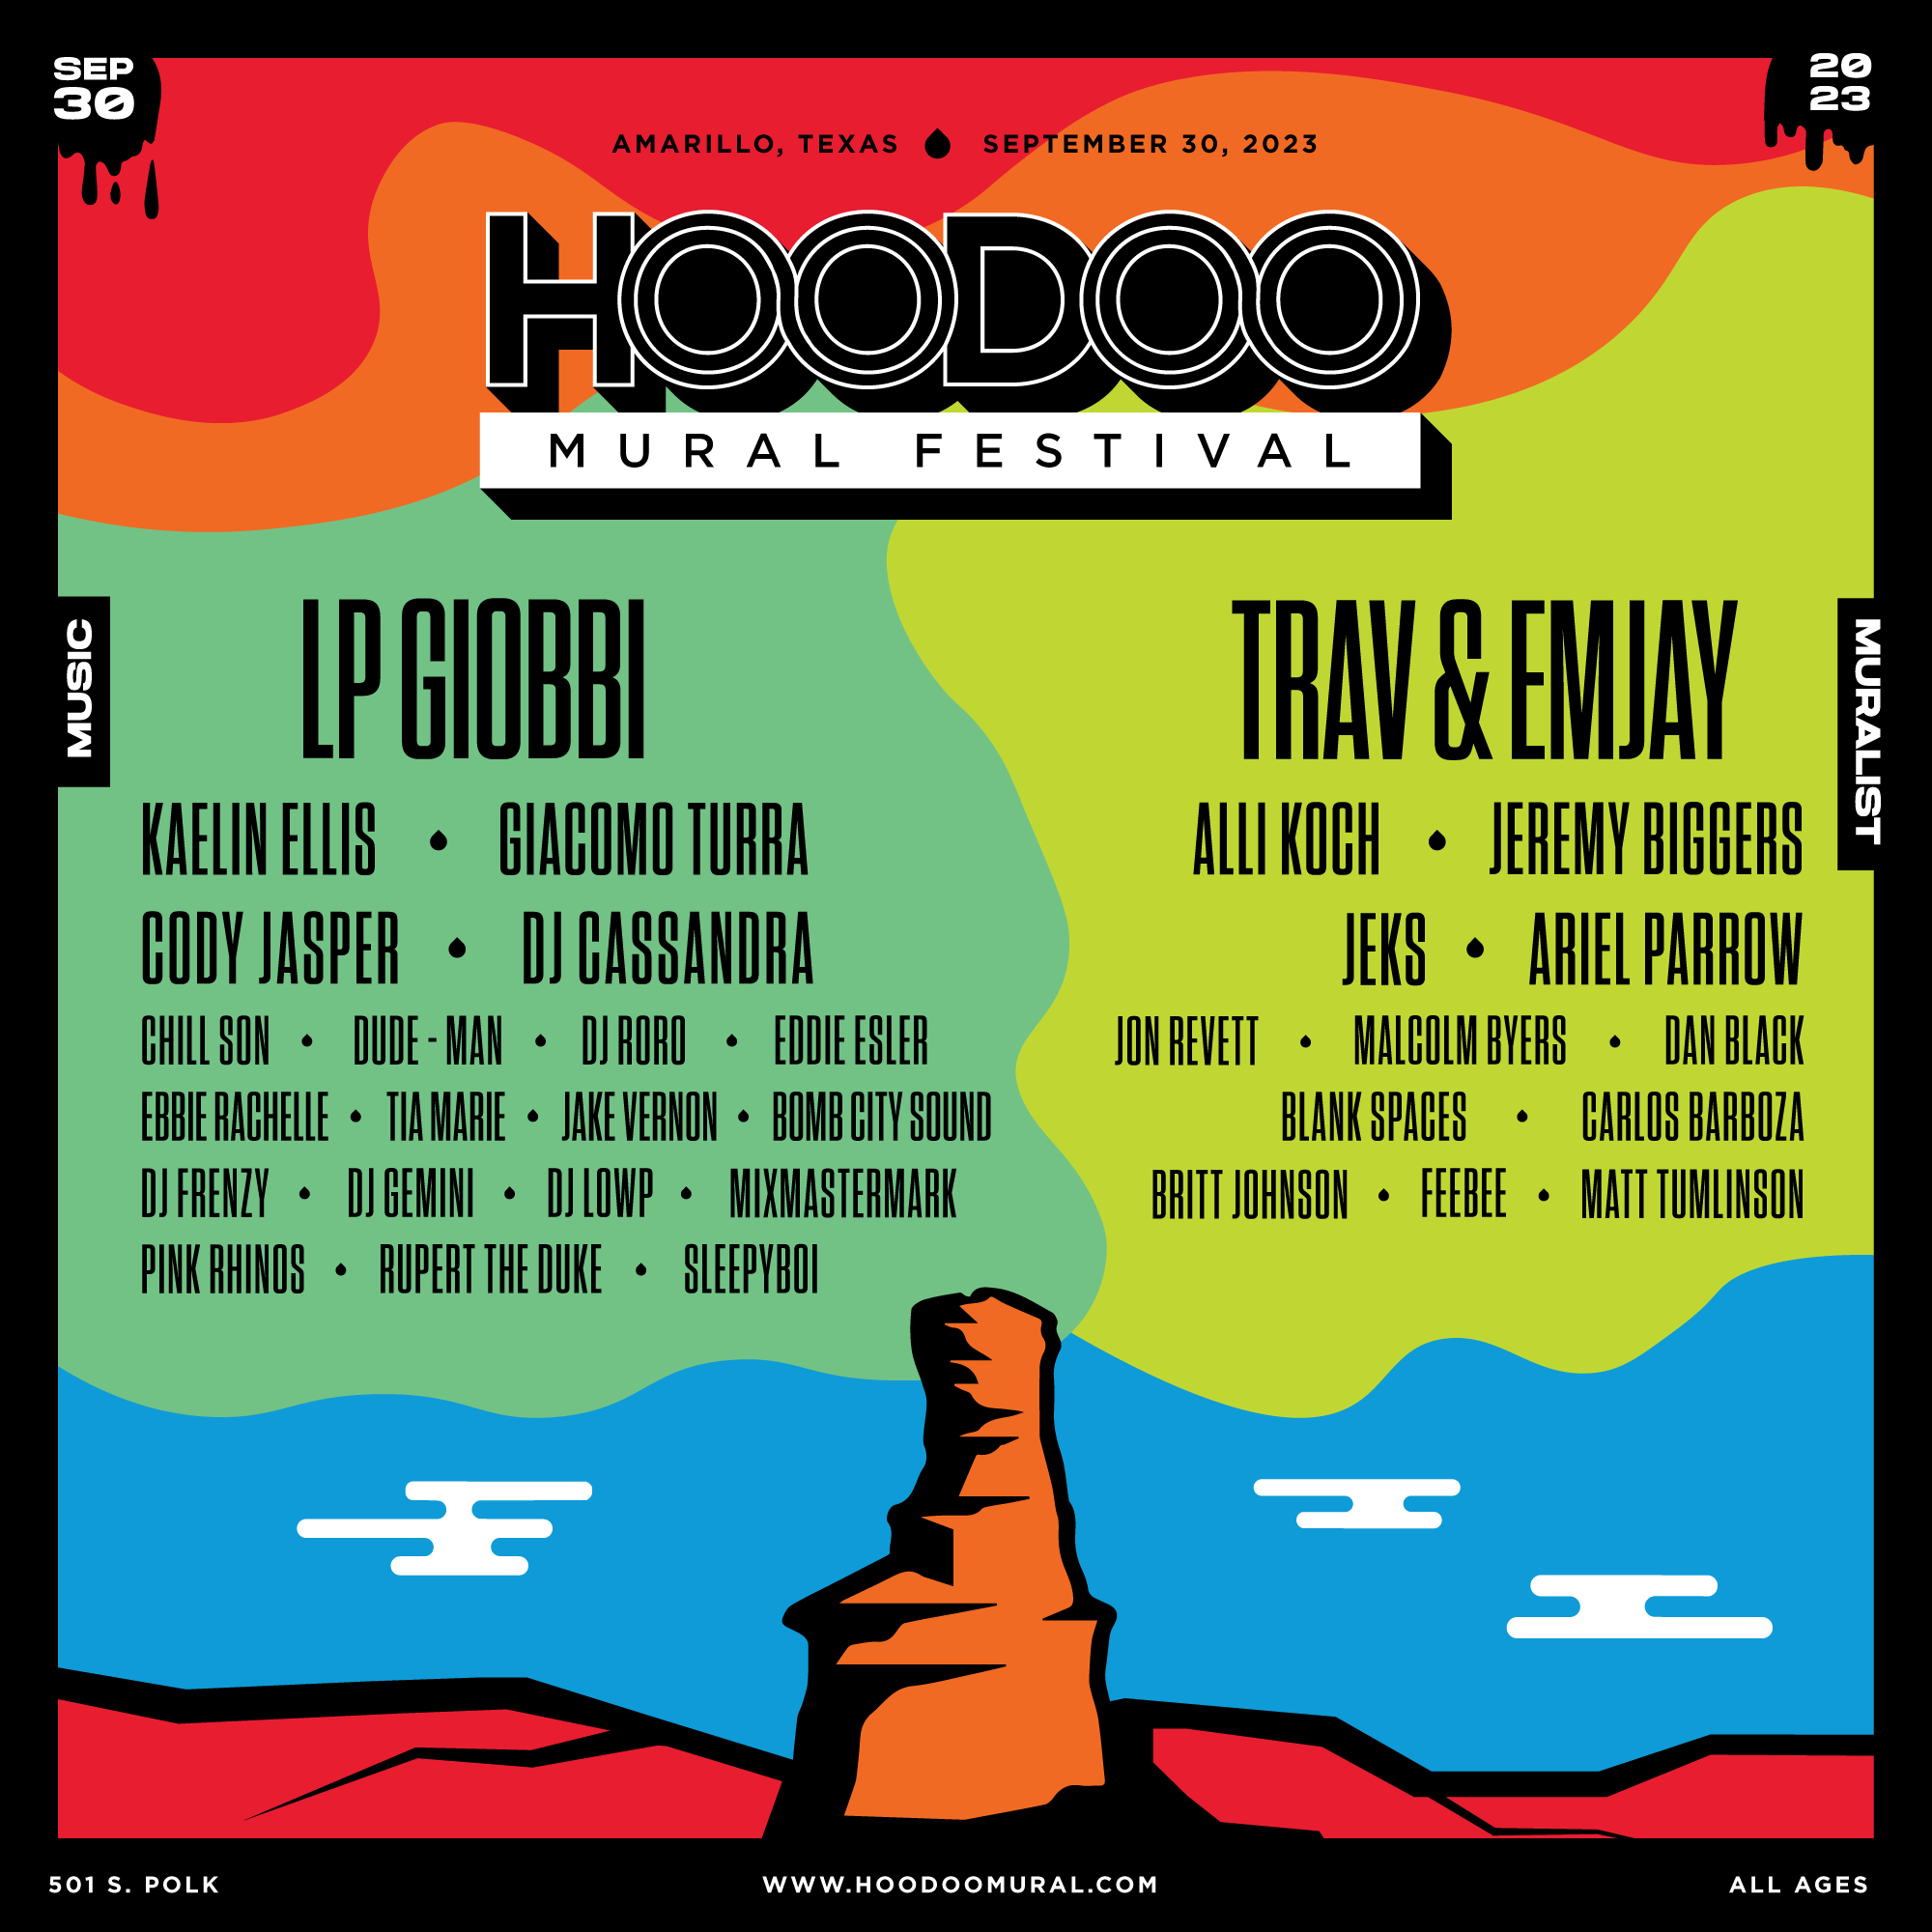 HOODOO Mural Festival 2023 Tickets at Hoodoo Mural Festival in Amarillo